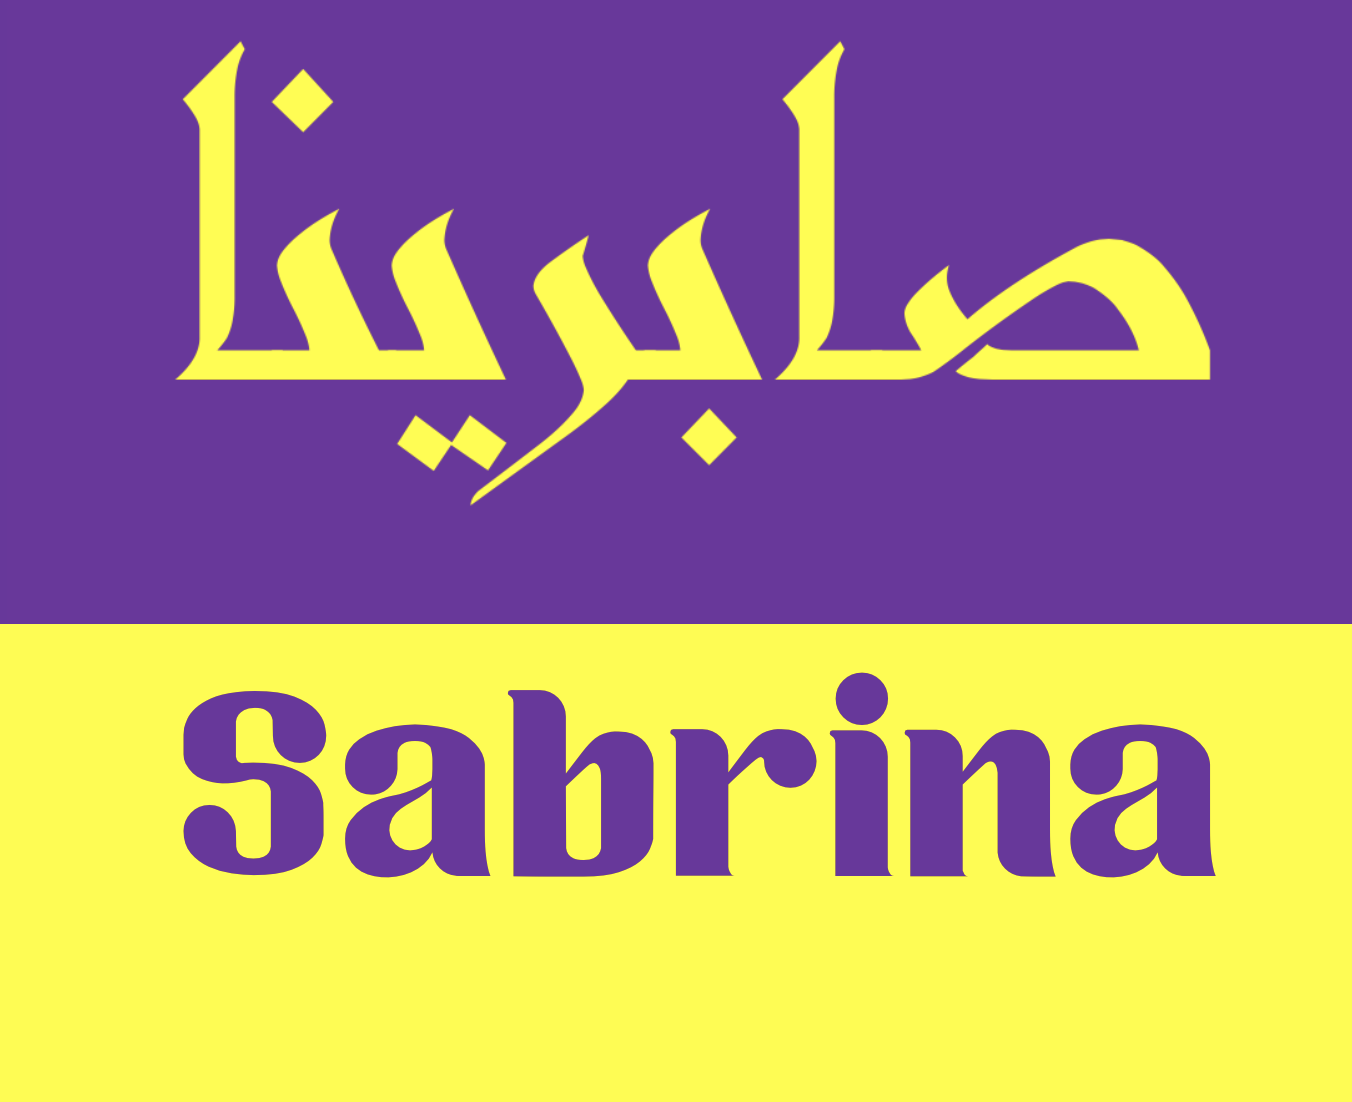 sabrina in Arabic calligraphy